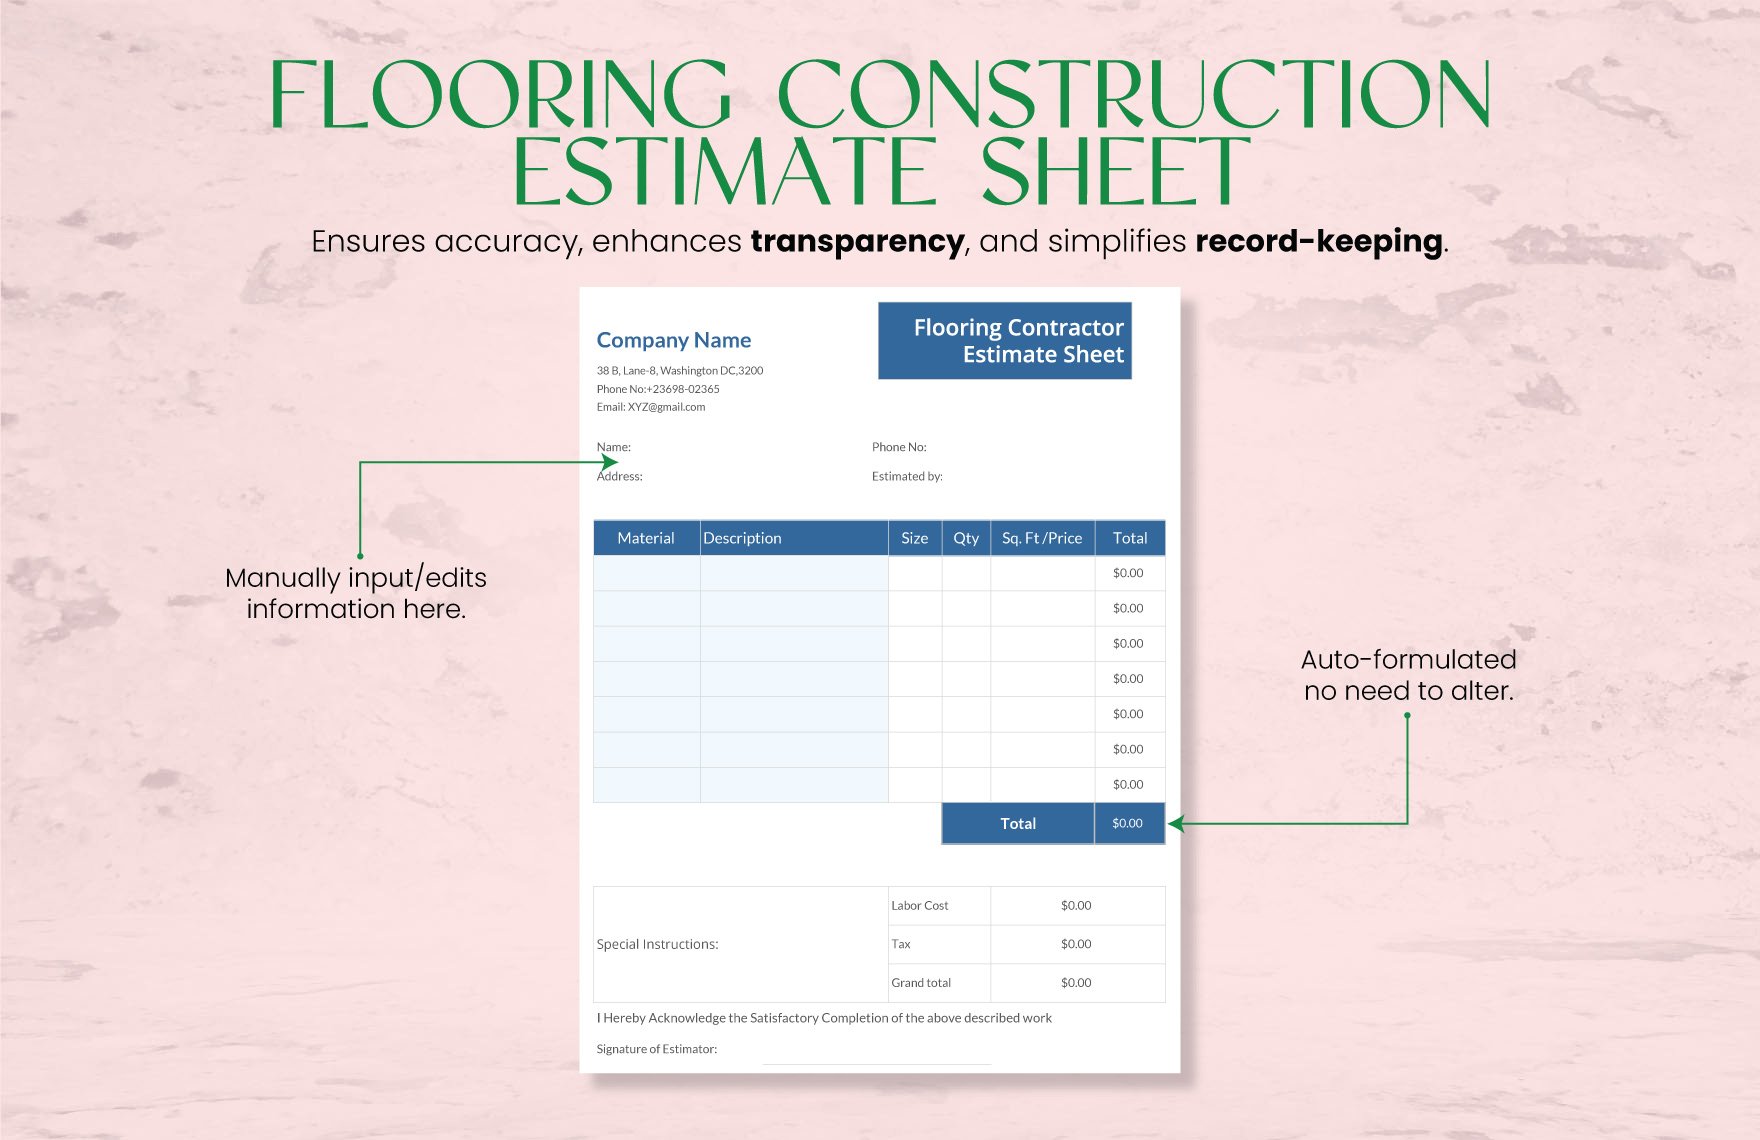 Flooring Contractor Estimate Sheet Template